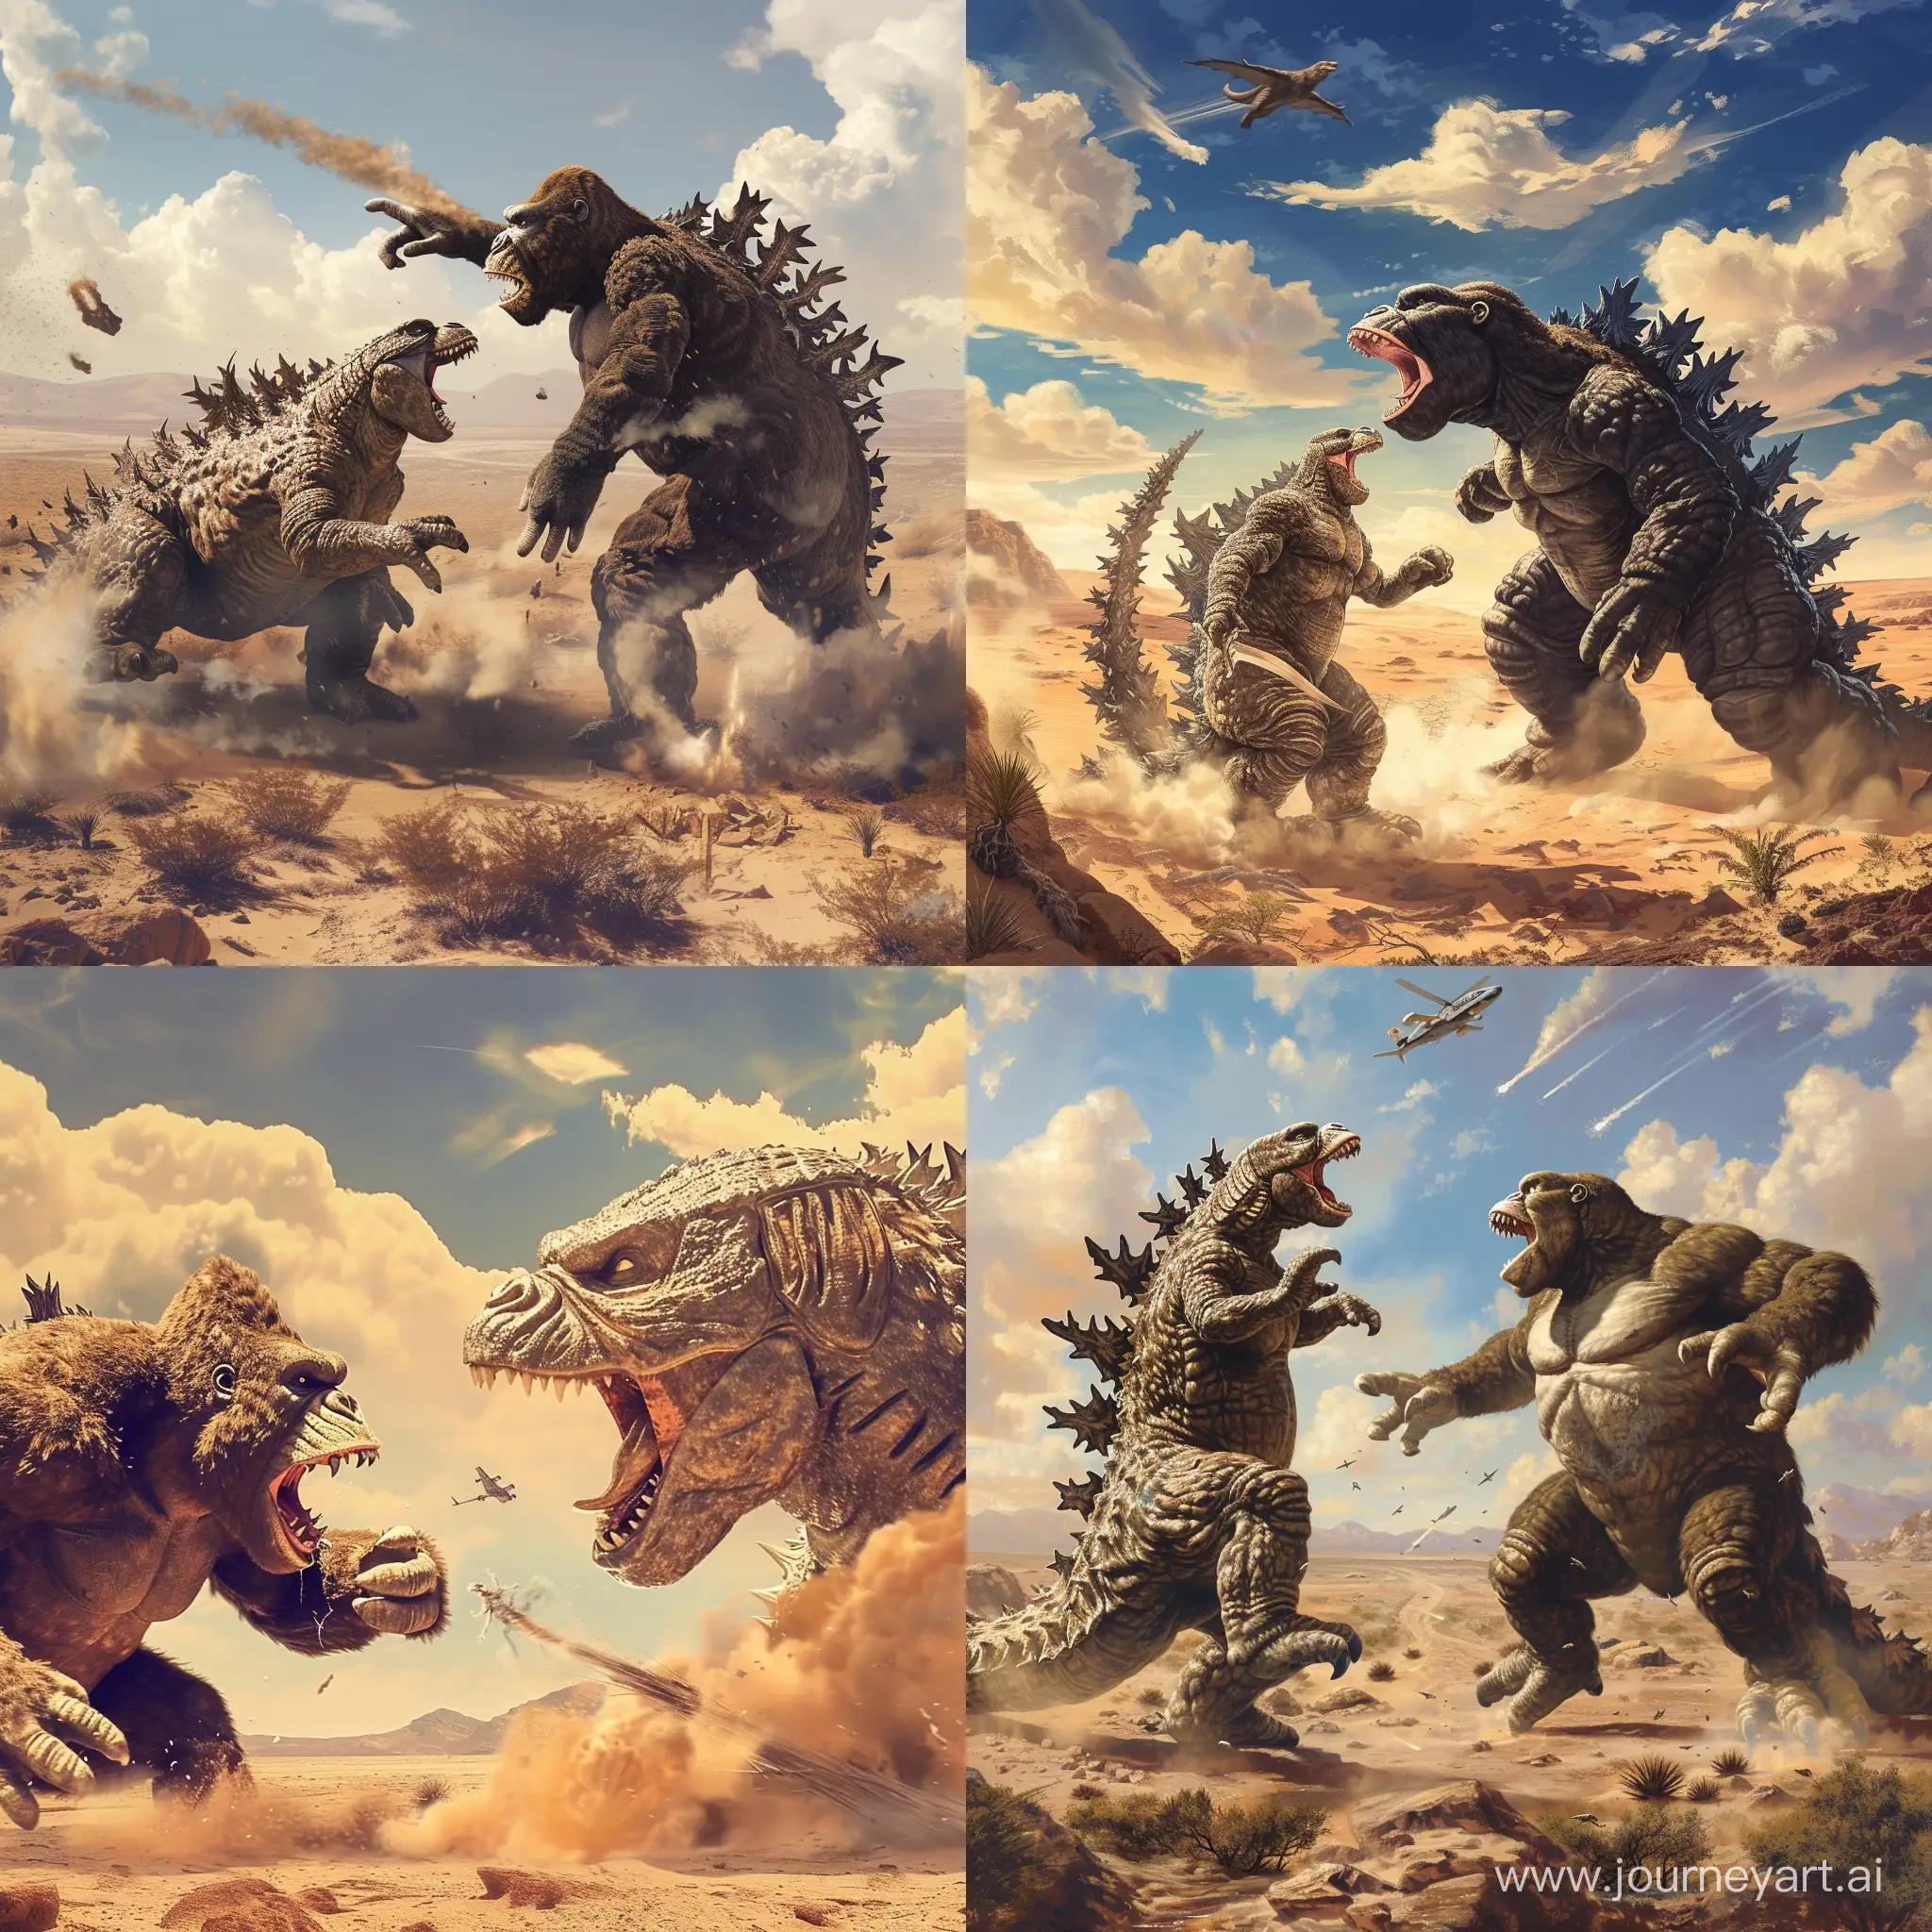 Epic-Clash-King-Kong-Battles-Godzilla-in-the-Desert